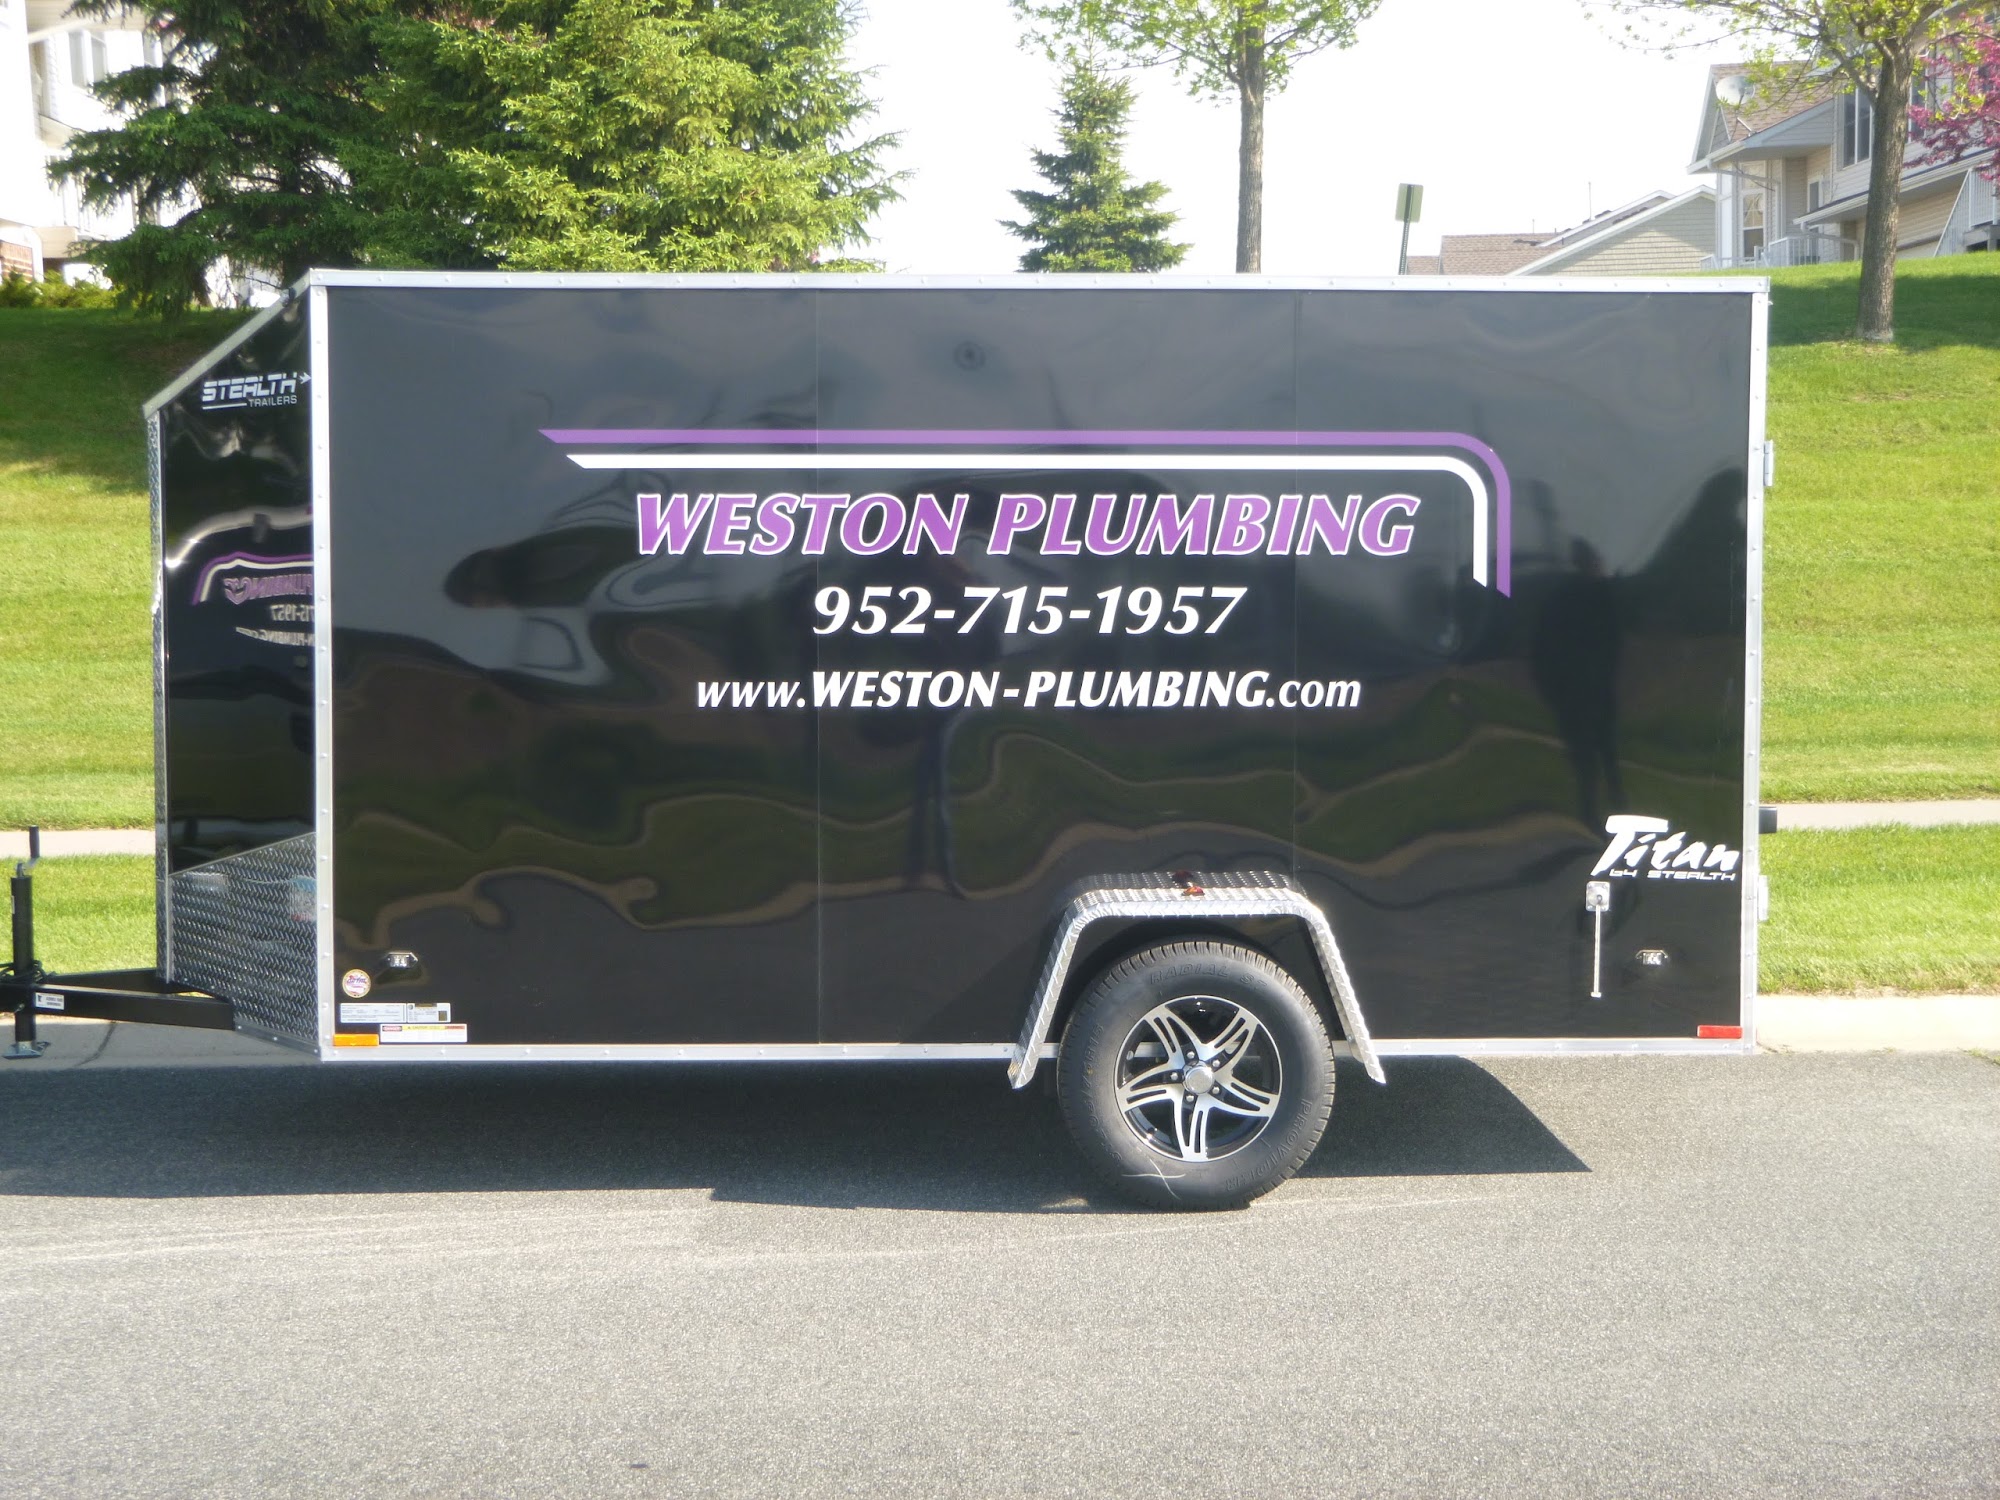 WESTON PLUMBING LLC